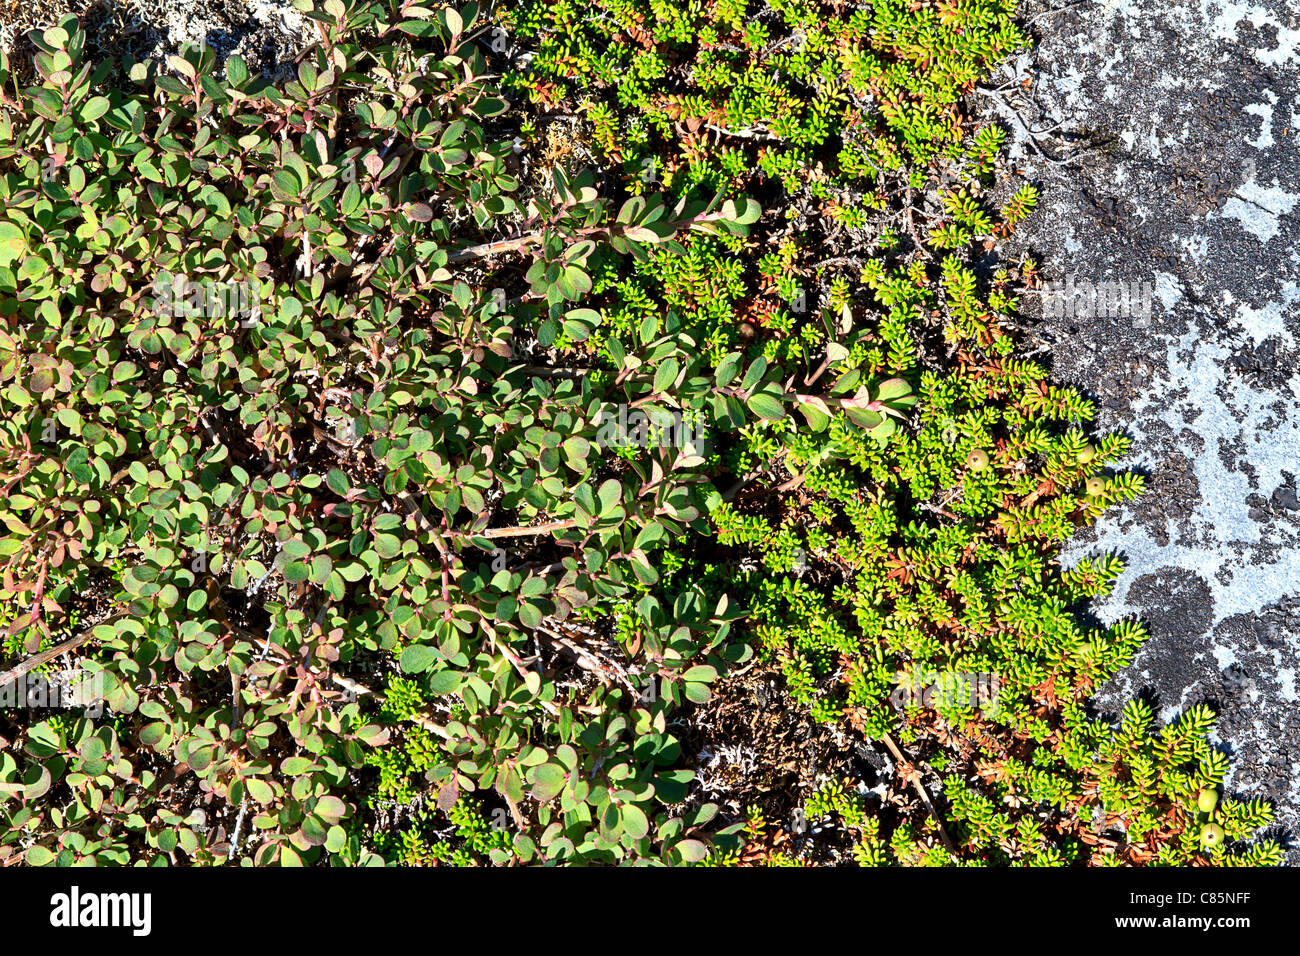 Arctic blueberry plants (Vaccinium uliginosum) growing next to crowberry (Empetrum nigrum). Stock Photo